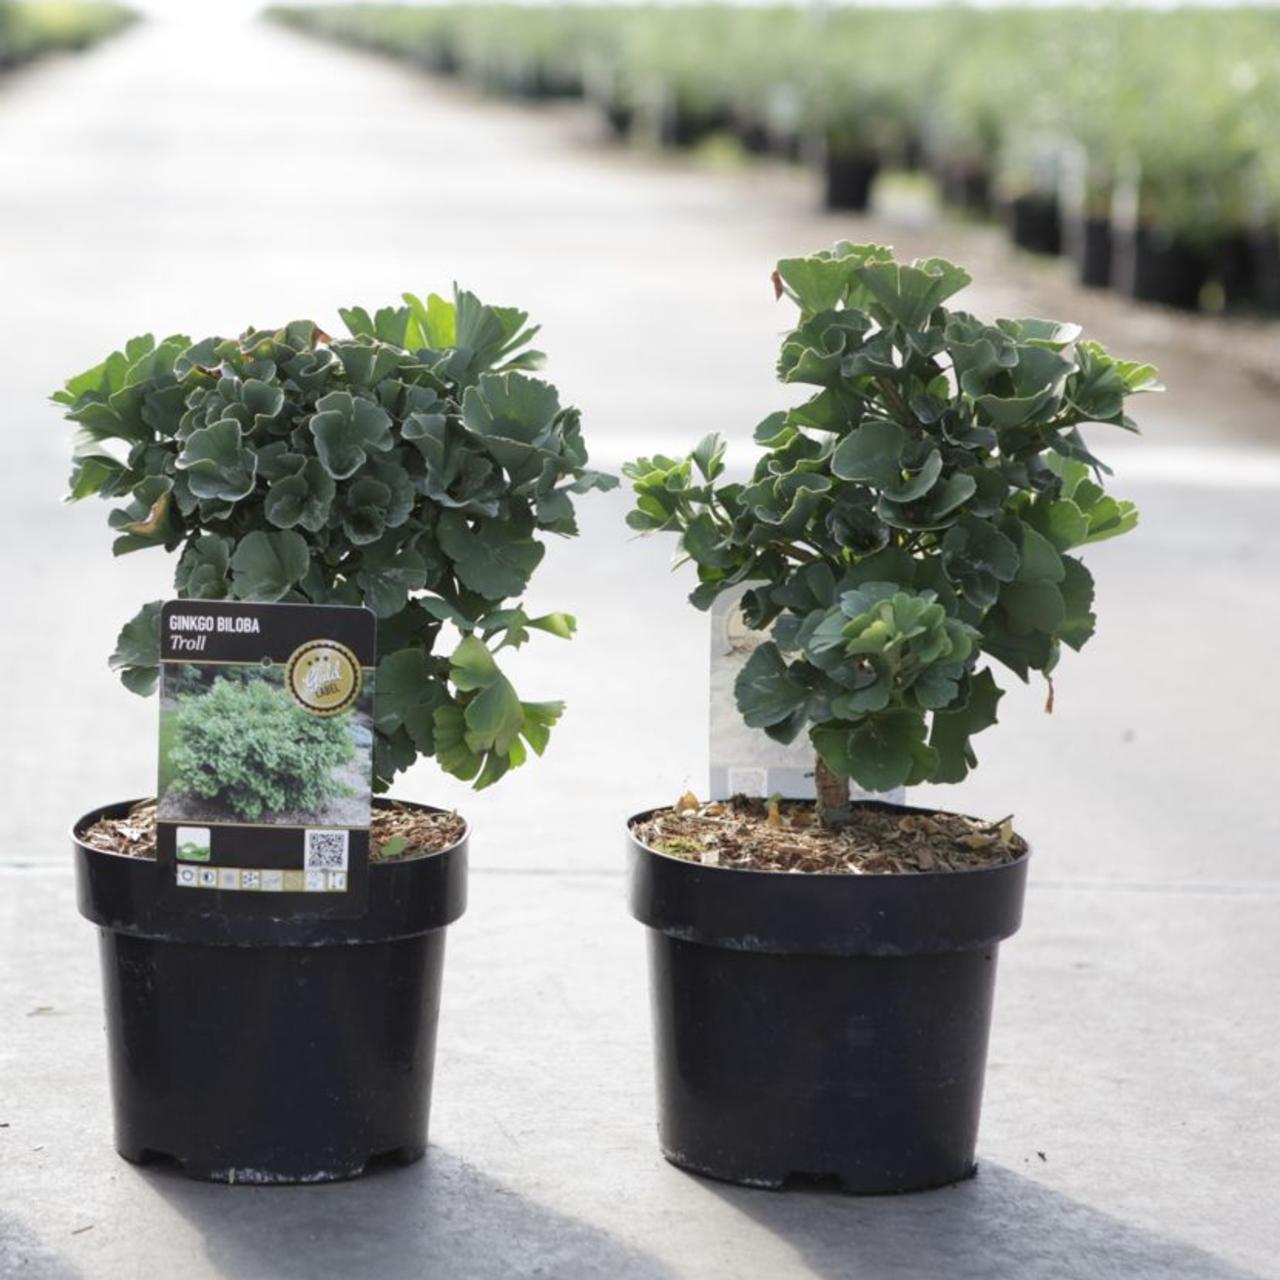 Monarch jam Derde Ginkgo biloba 'Troll' - planten kopen bij Coolplants